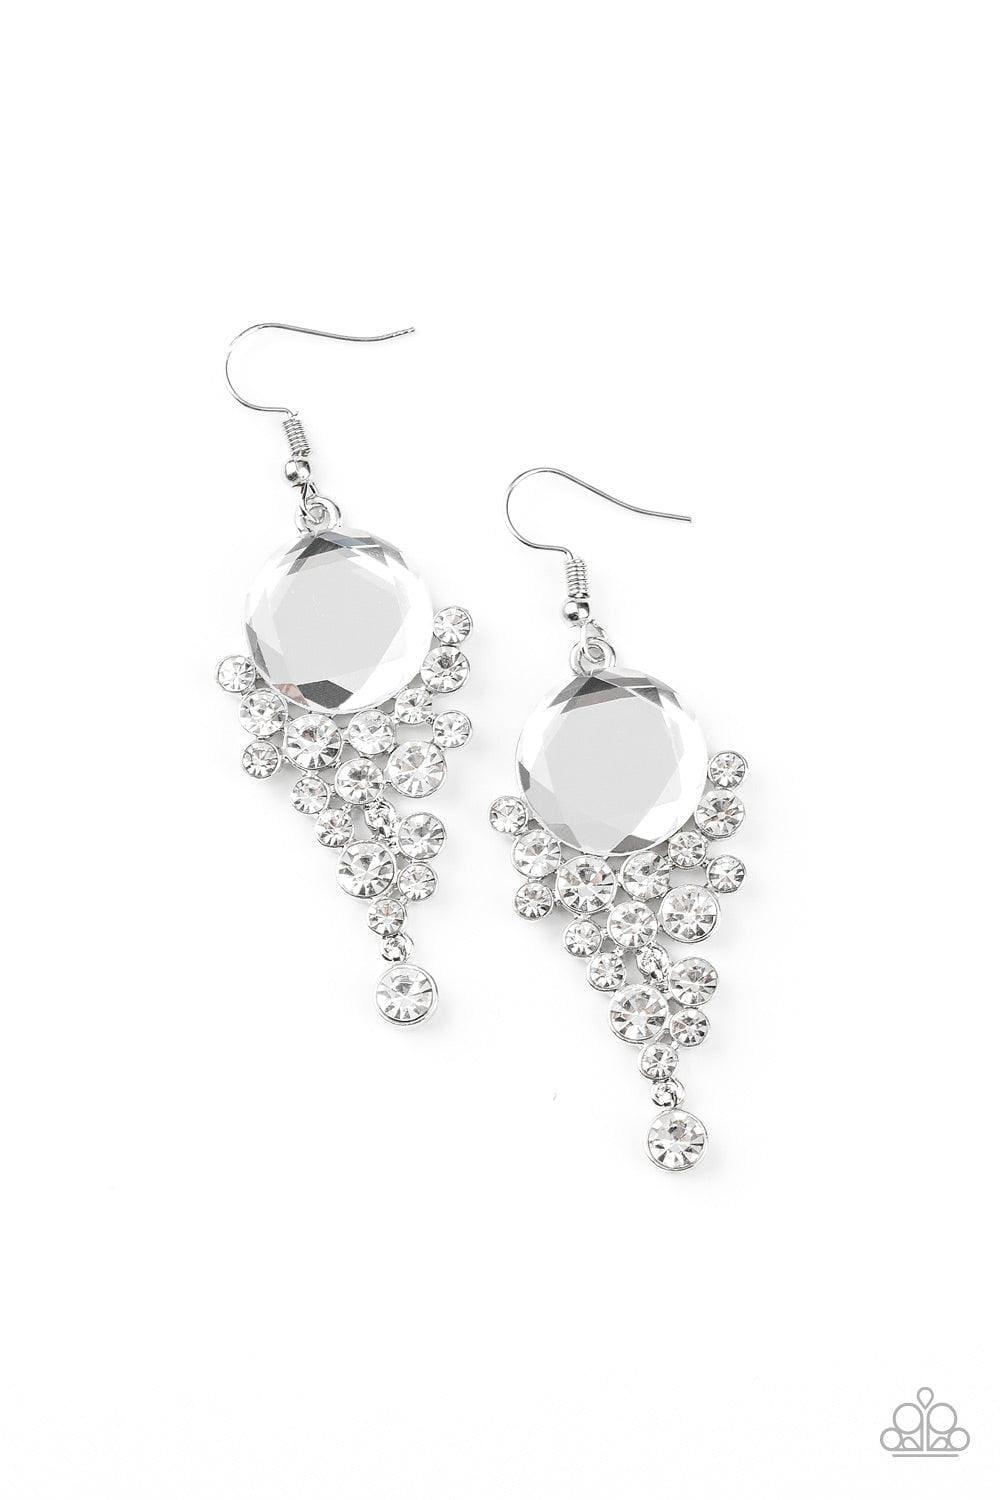 Paparazzi Accessories - Elegantly Effervescent - White Earrings - Bling by JessieK